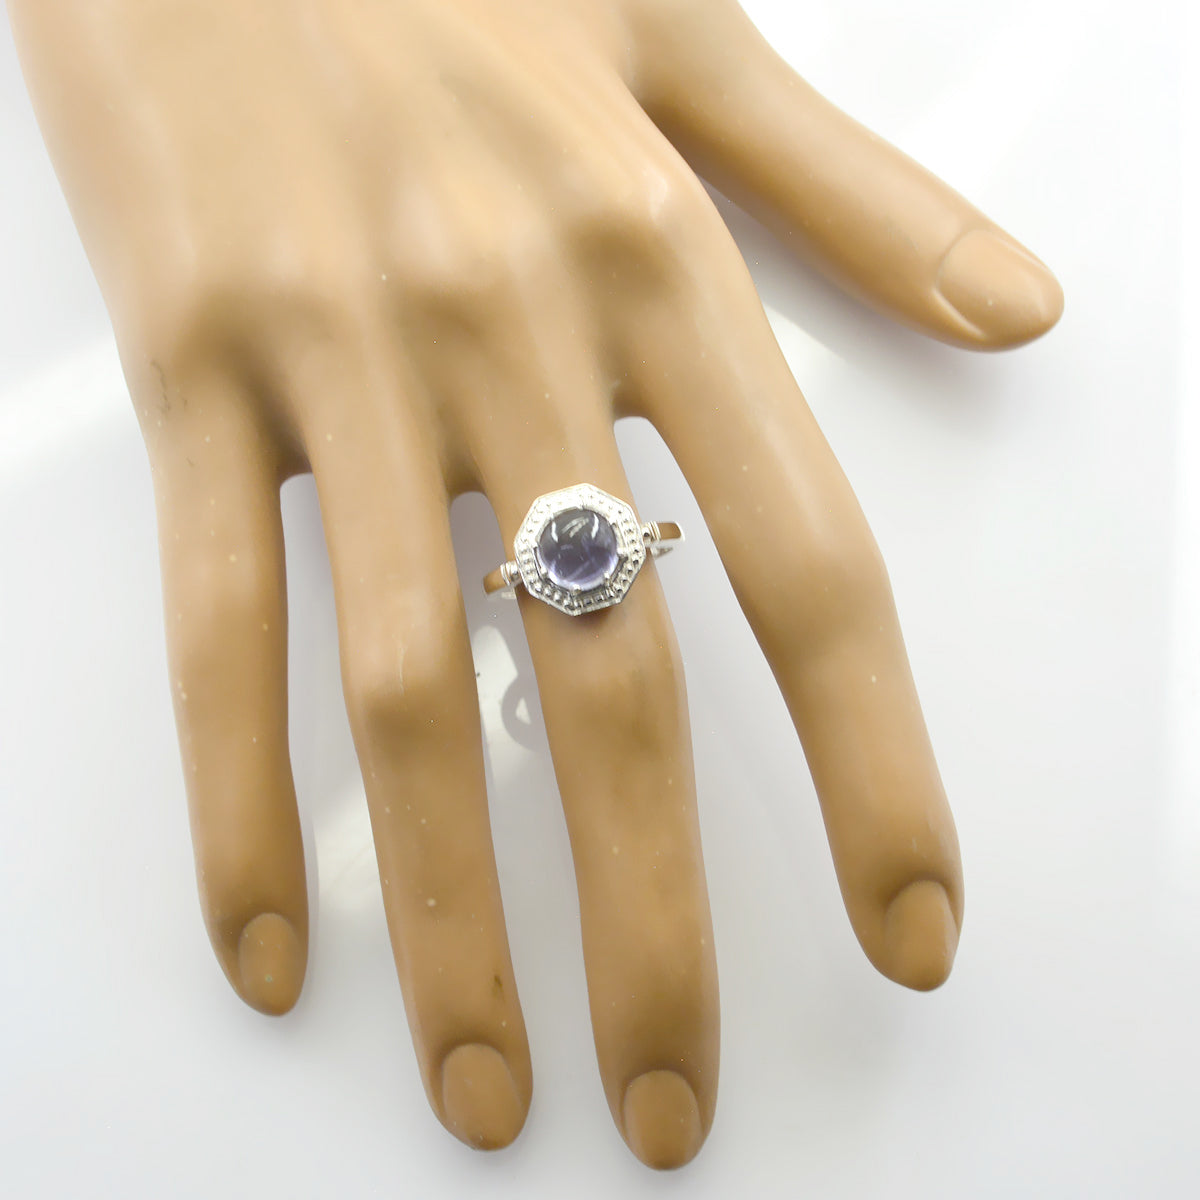 Riyo Exquisite Gem Iolite 925 Sterling Silver Ring Luxury Jewelry